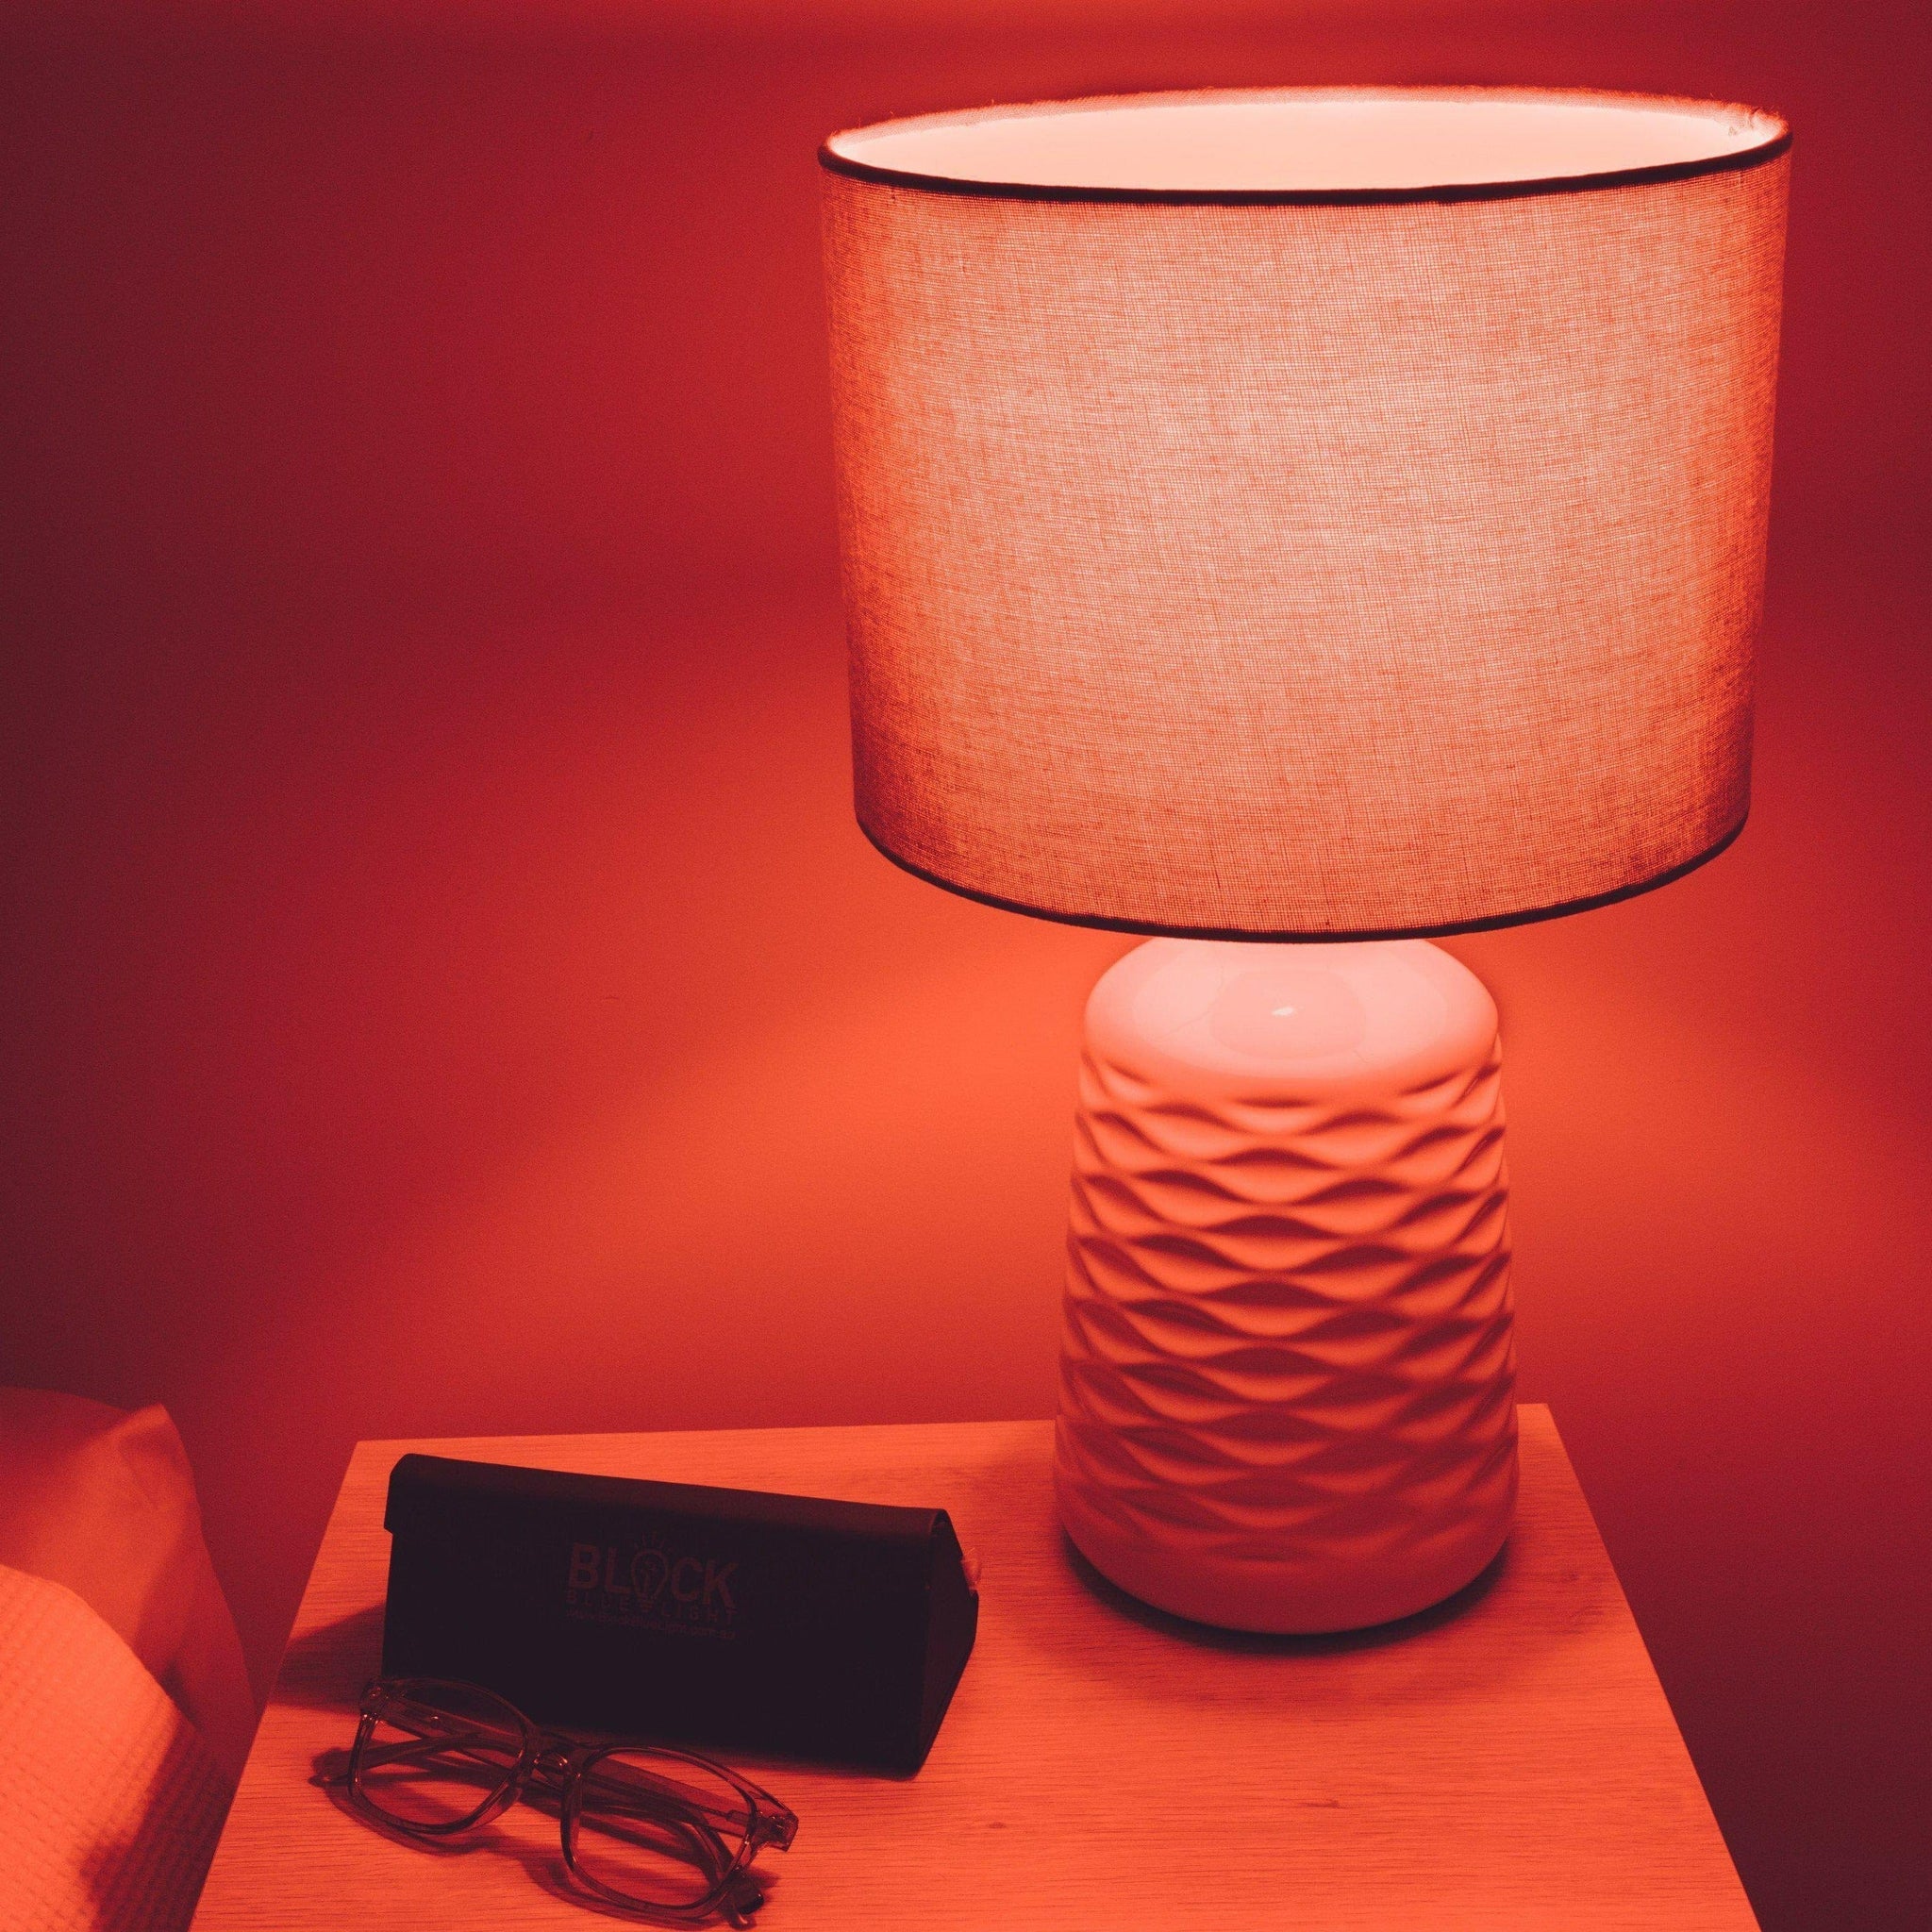 Twilight Red light Bedtime Bulb - E12 (Small Screw Fitting) For Lamps